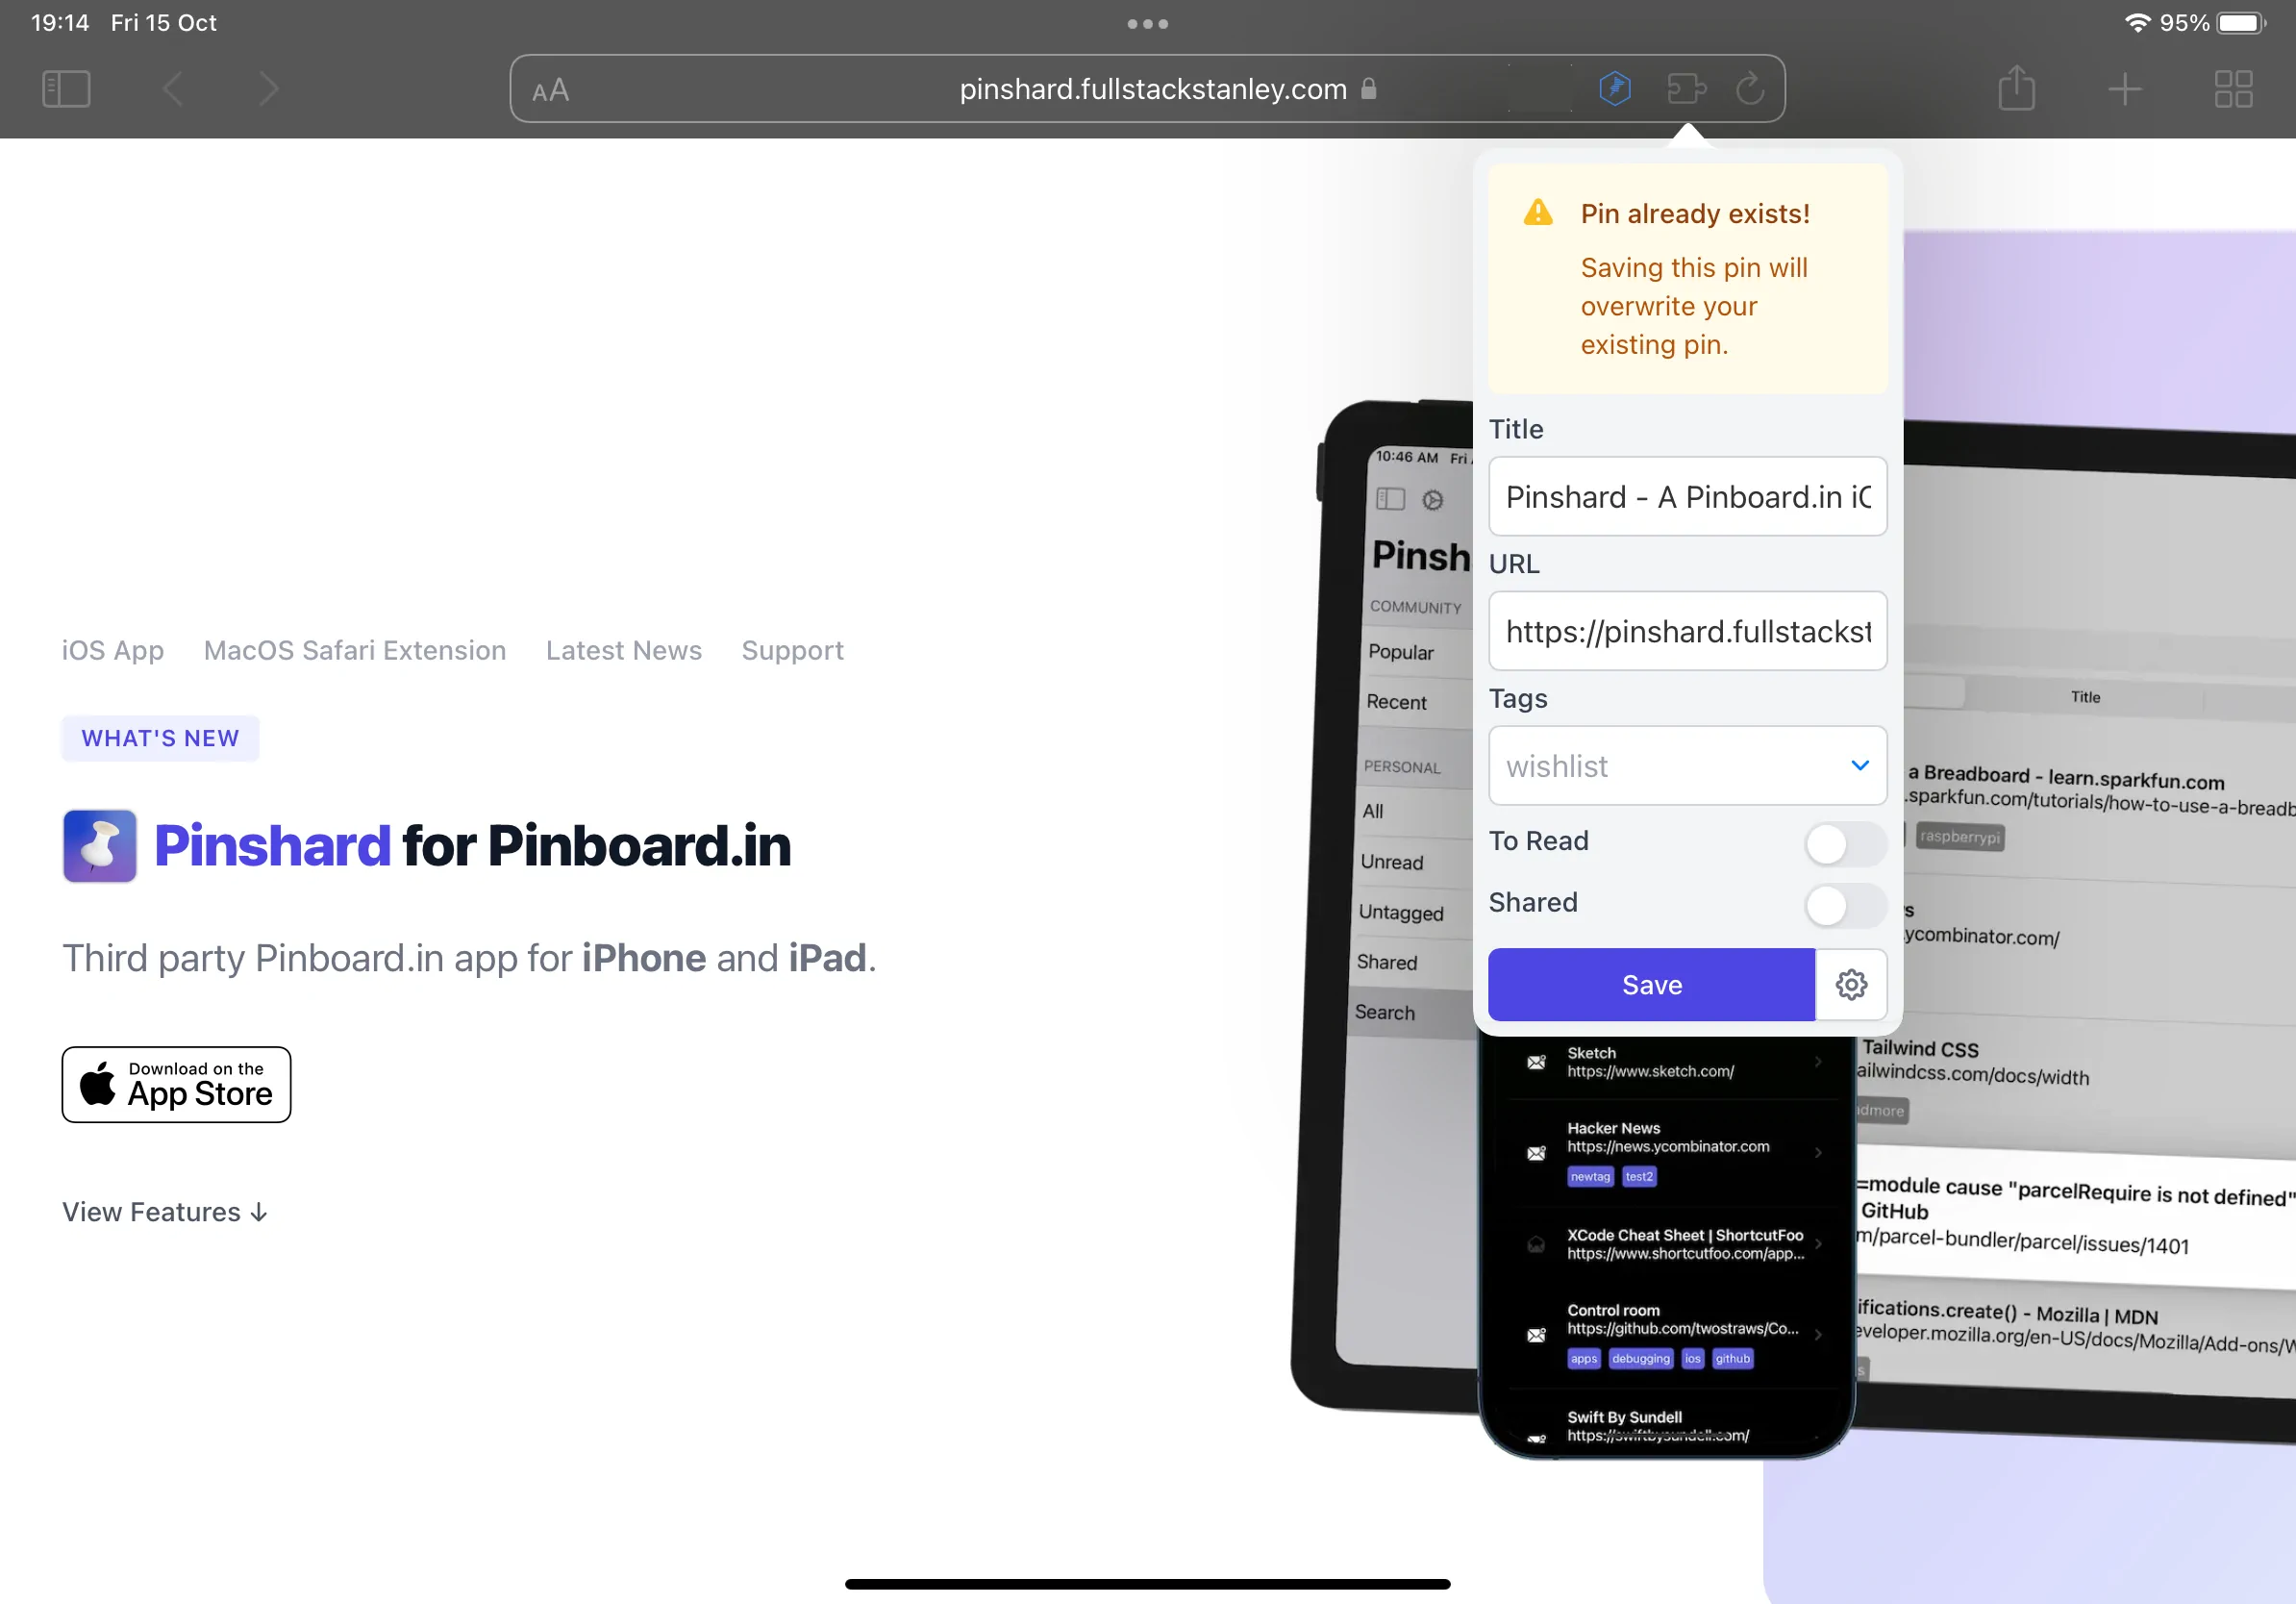 The new Pinshard Mini Safari Extension on iPadOS